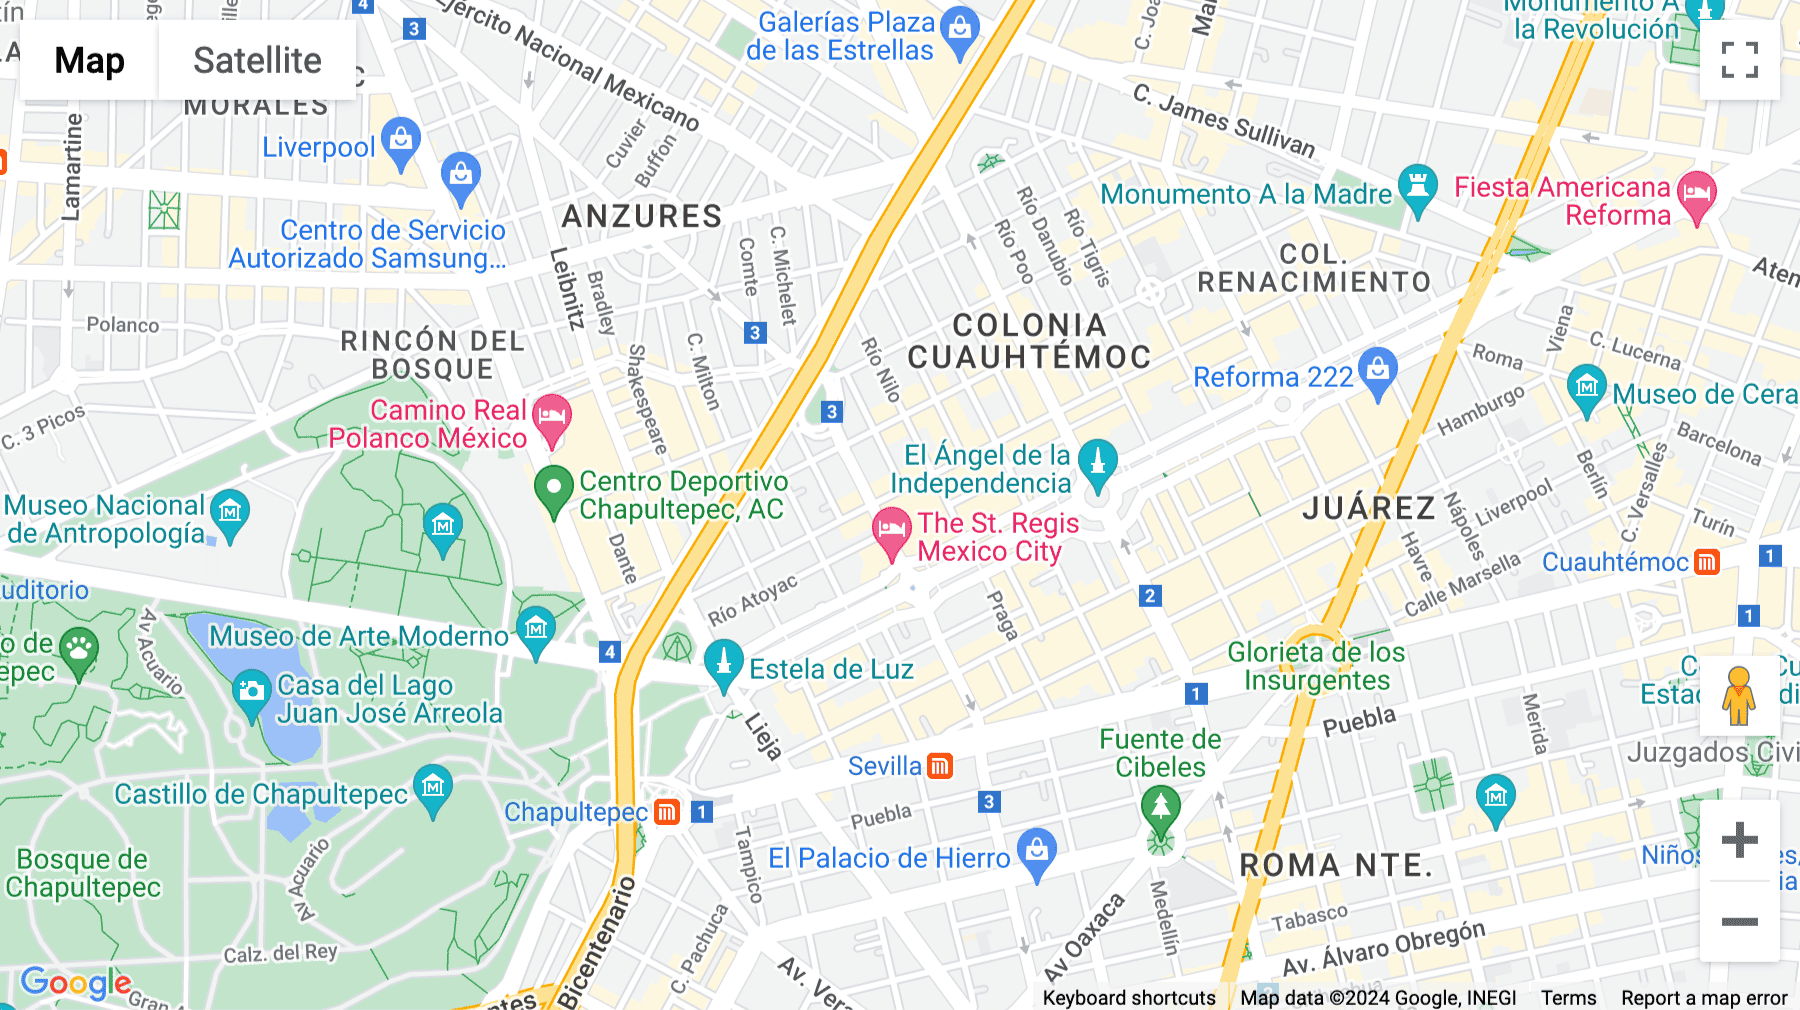 Click for interative map of Río Lerma No.232, Col. Cuauhtémoc, piso 23, Cuauhtémoc, piso 23, Mexico City